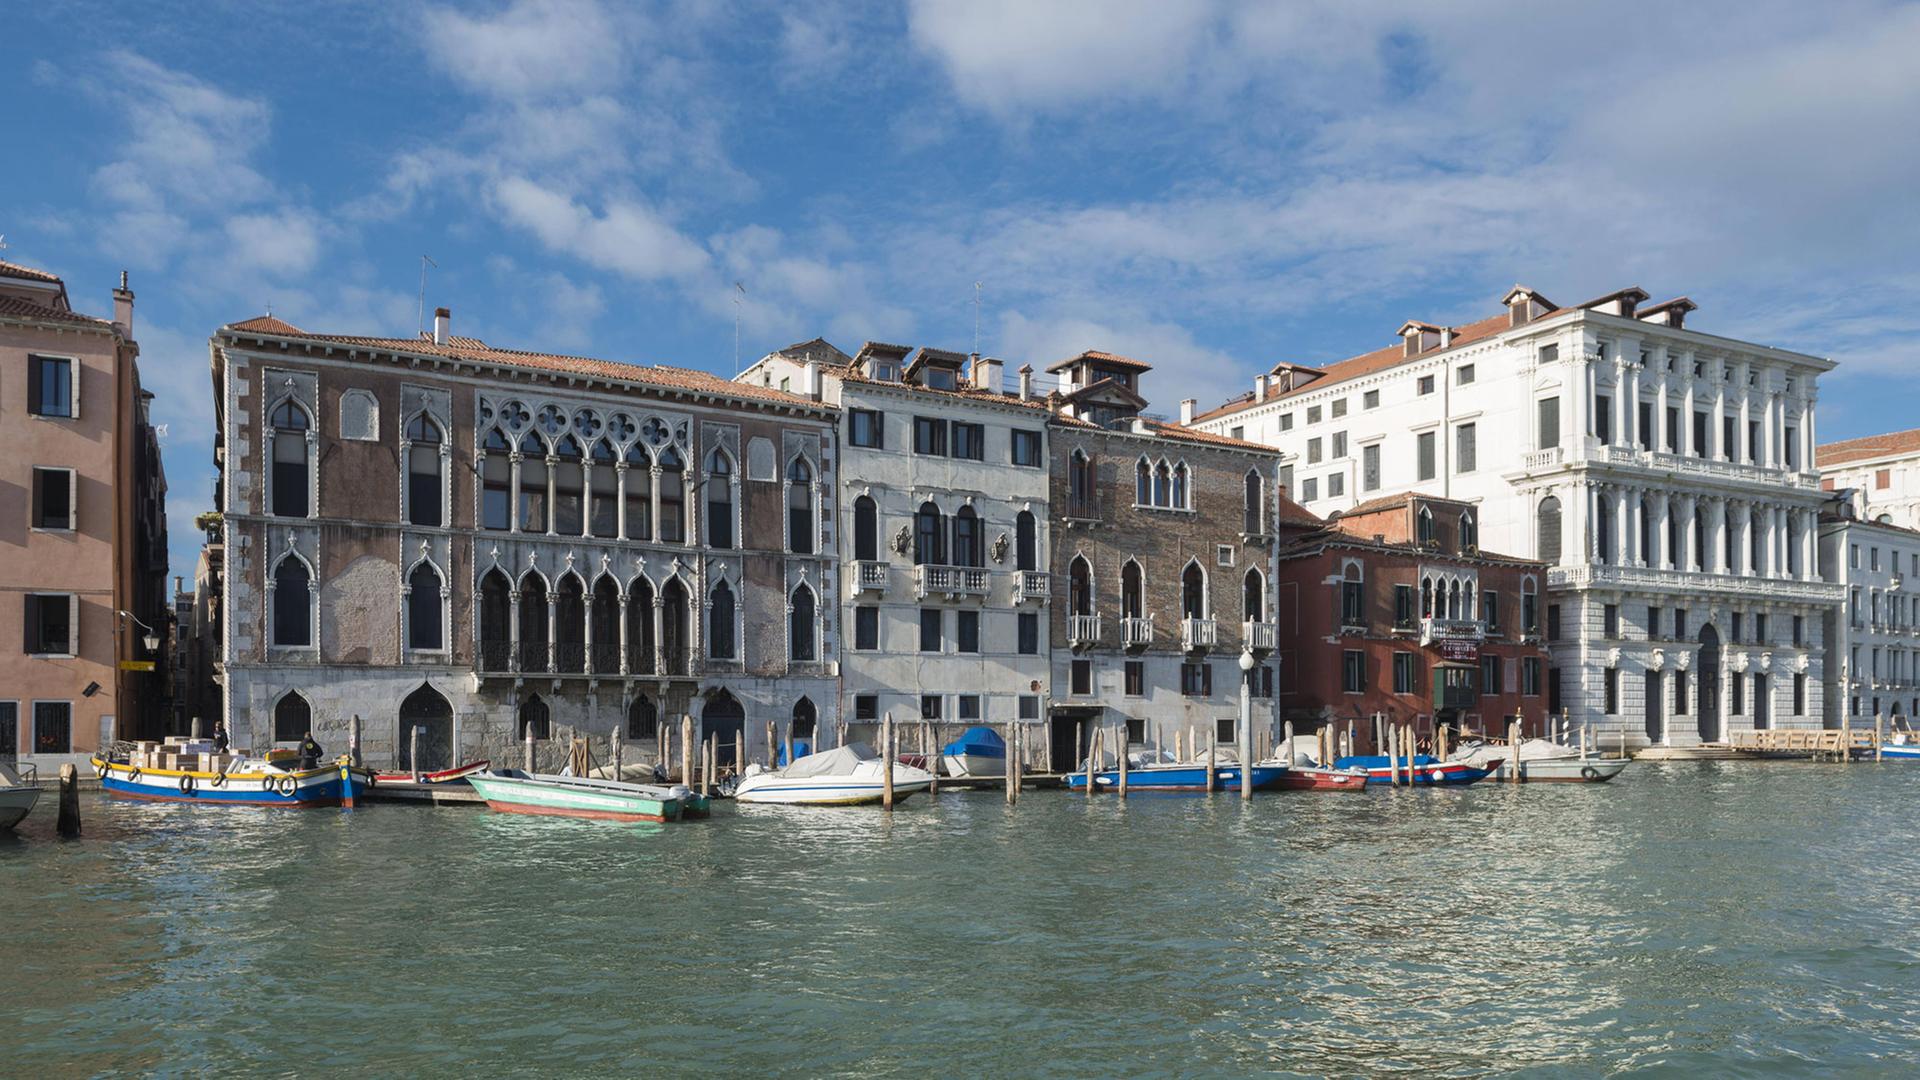 Links Palazzo Morosini Brandolin, rechts Palazzo Ca? Corner della Regina, Canal Grande, Stadtteil San Polo, Venedig